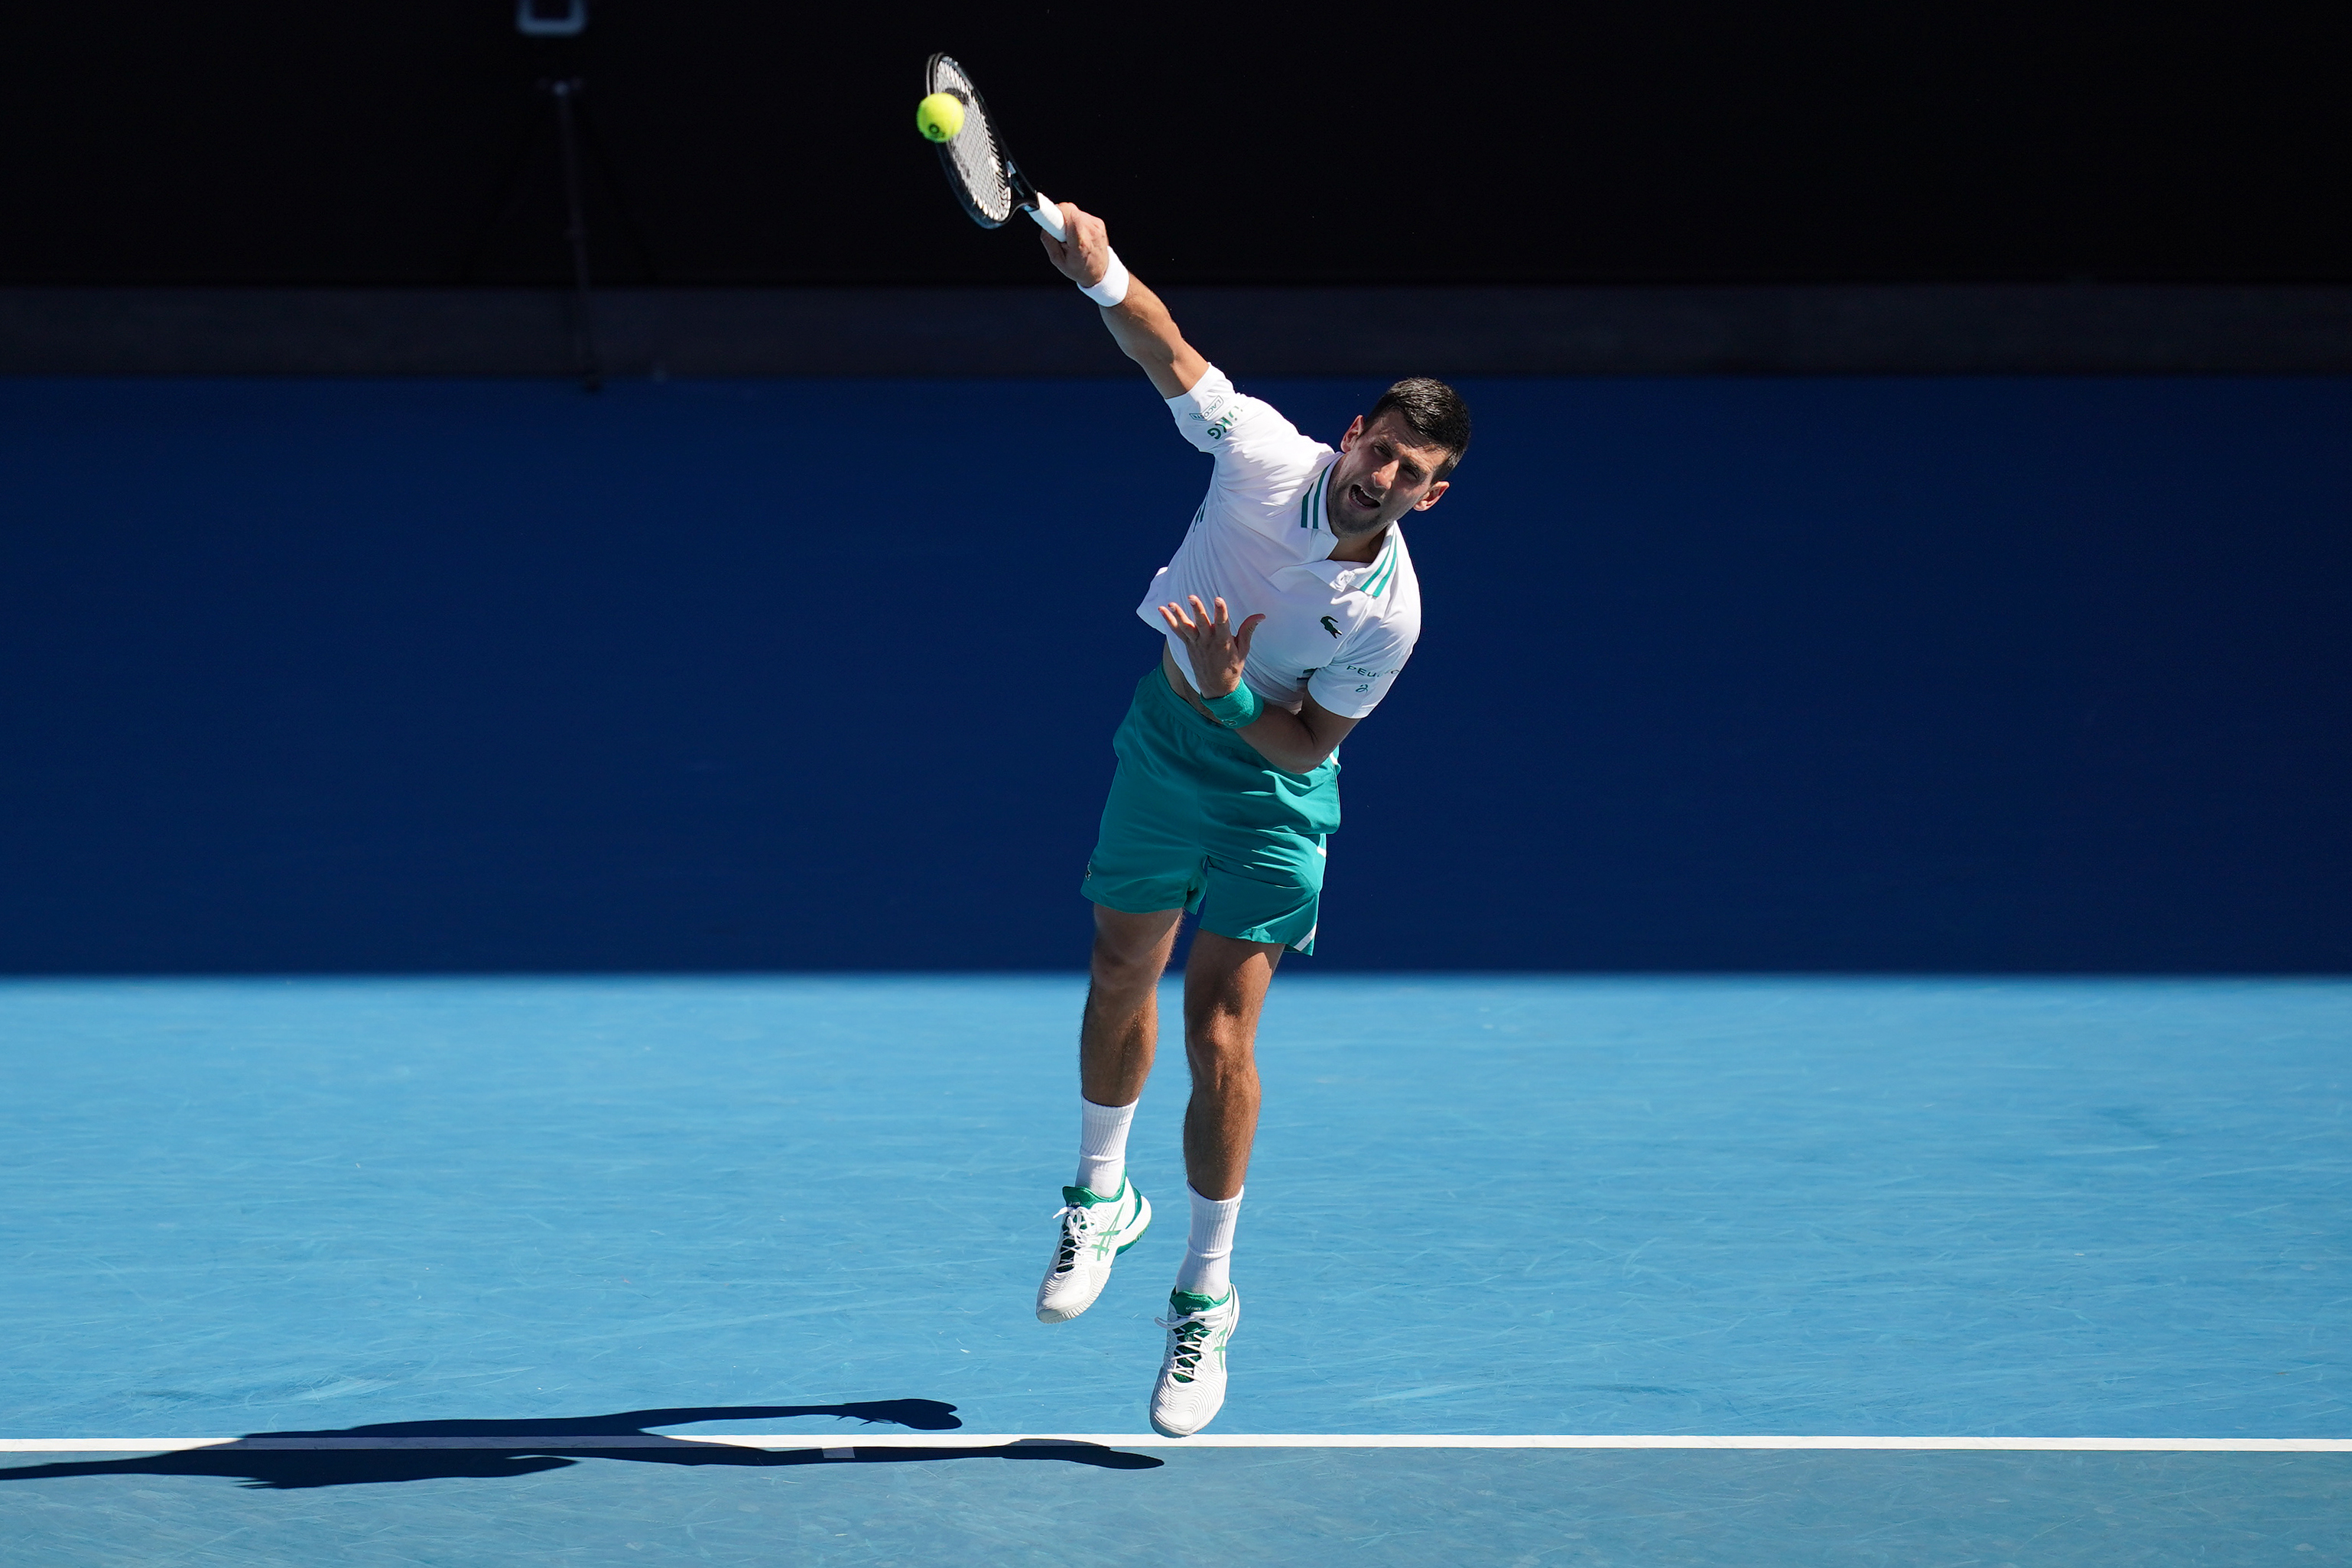 Novak DJOKOVIC (SRB) plays Frances TIAFOE (USA) on Rod Laver Arena during Day 3 of the 2021 Australian Open.